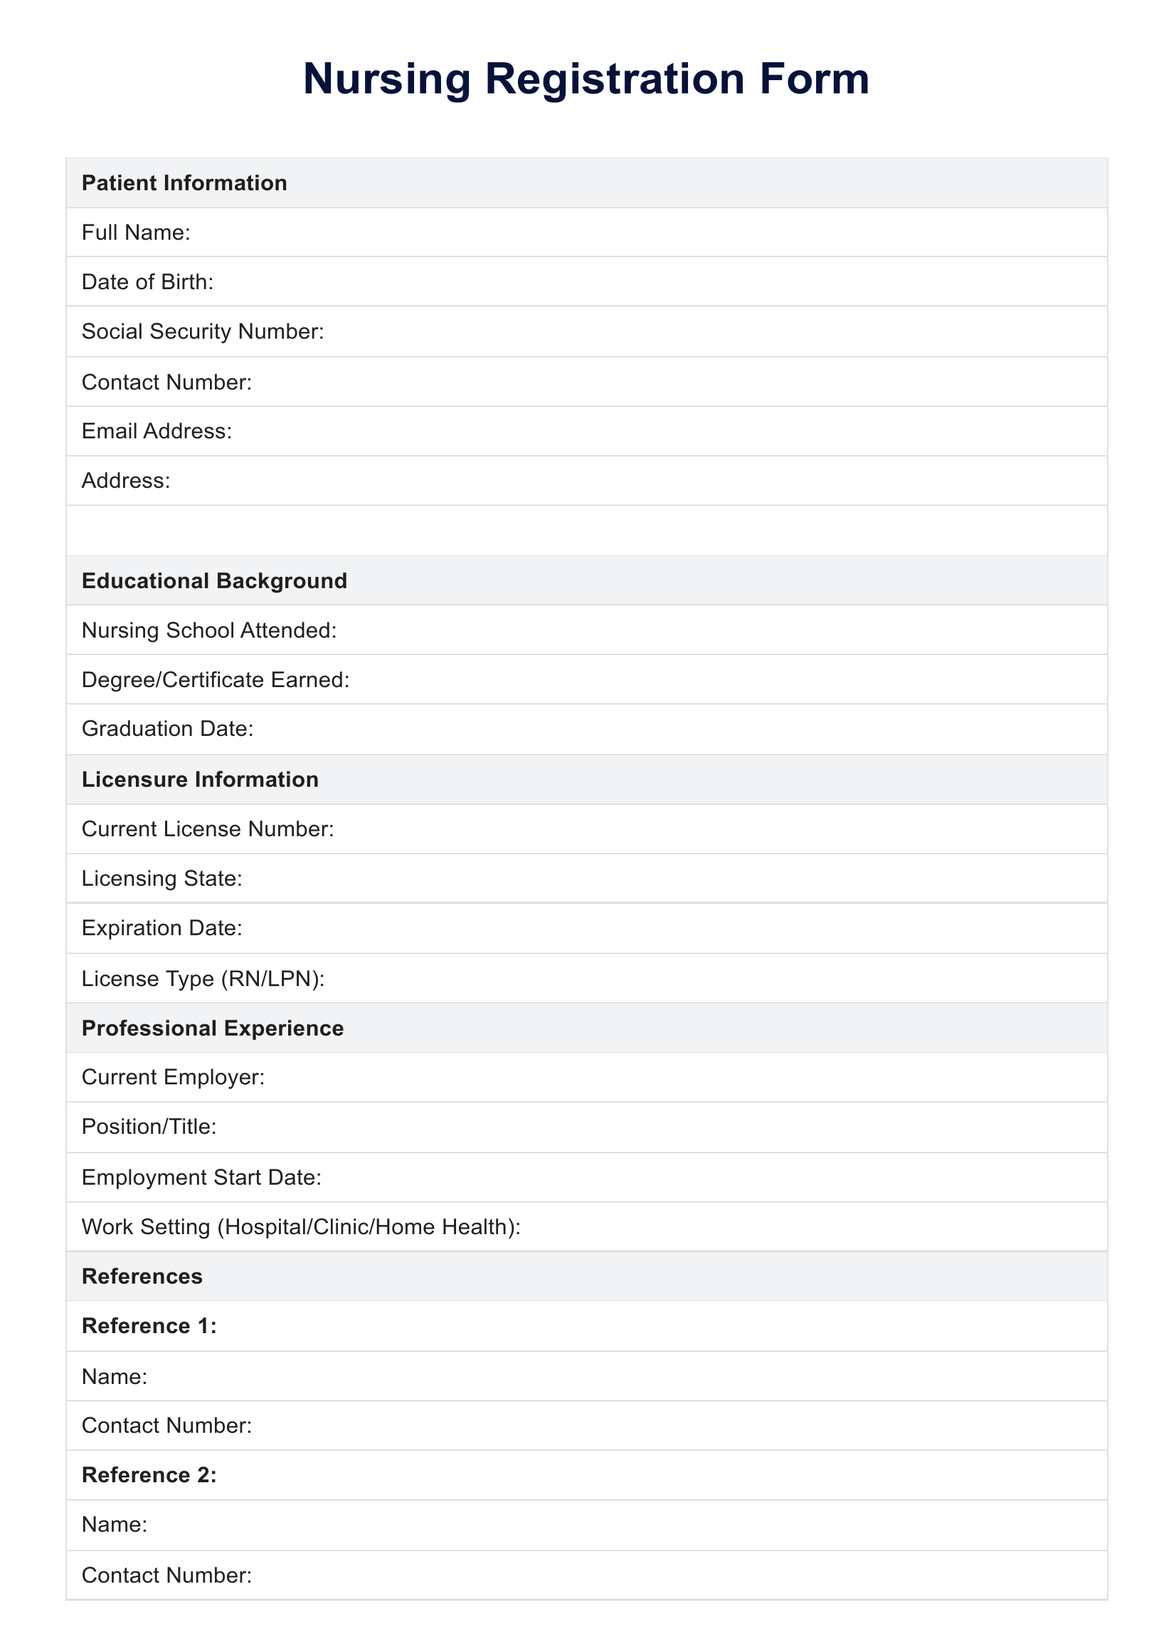 Nursing Registration Form PDF Example